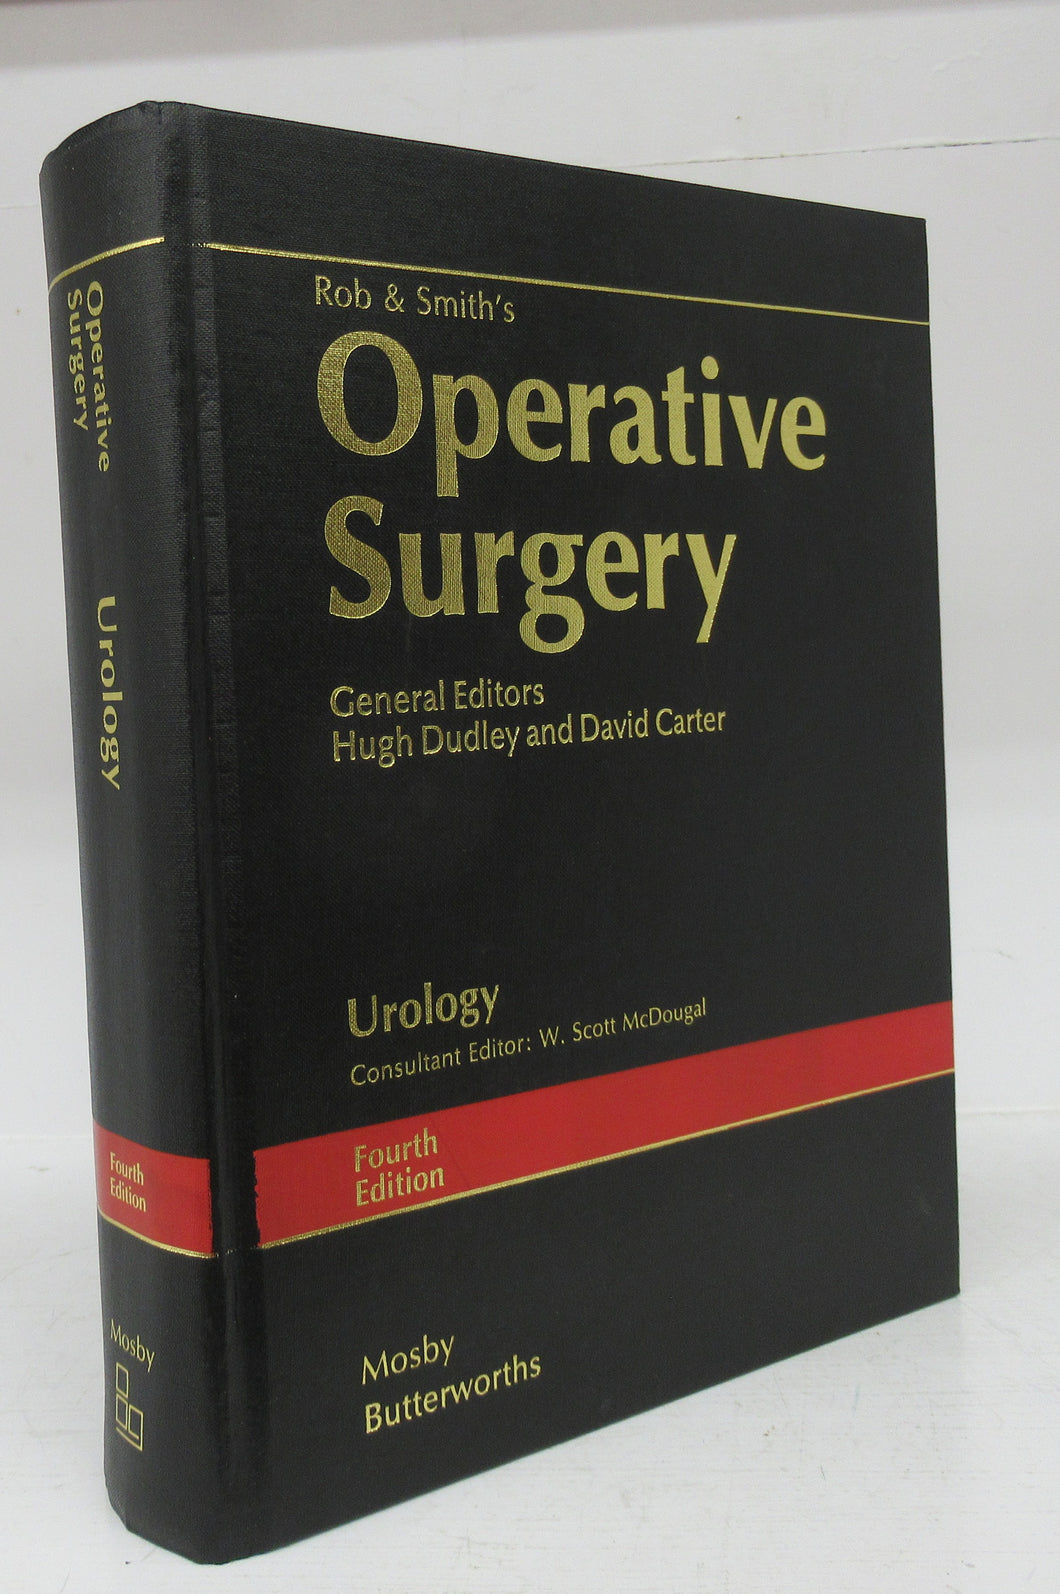 rob & smiths operative surgery